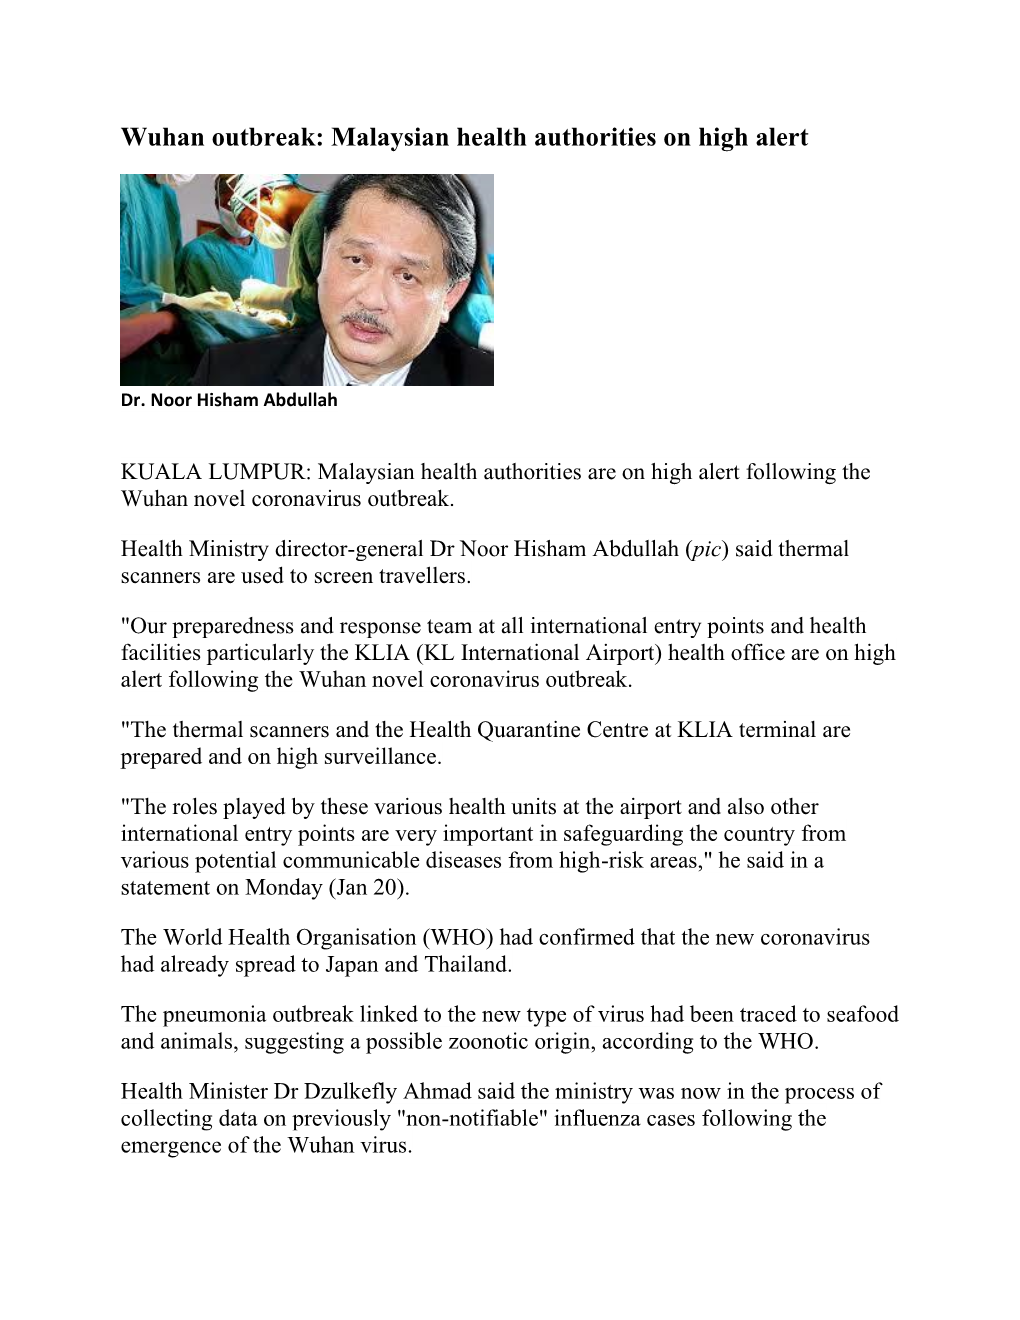 Wuhan Outbreak: Malaysian Health Authorities on High Alert